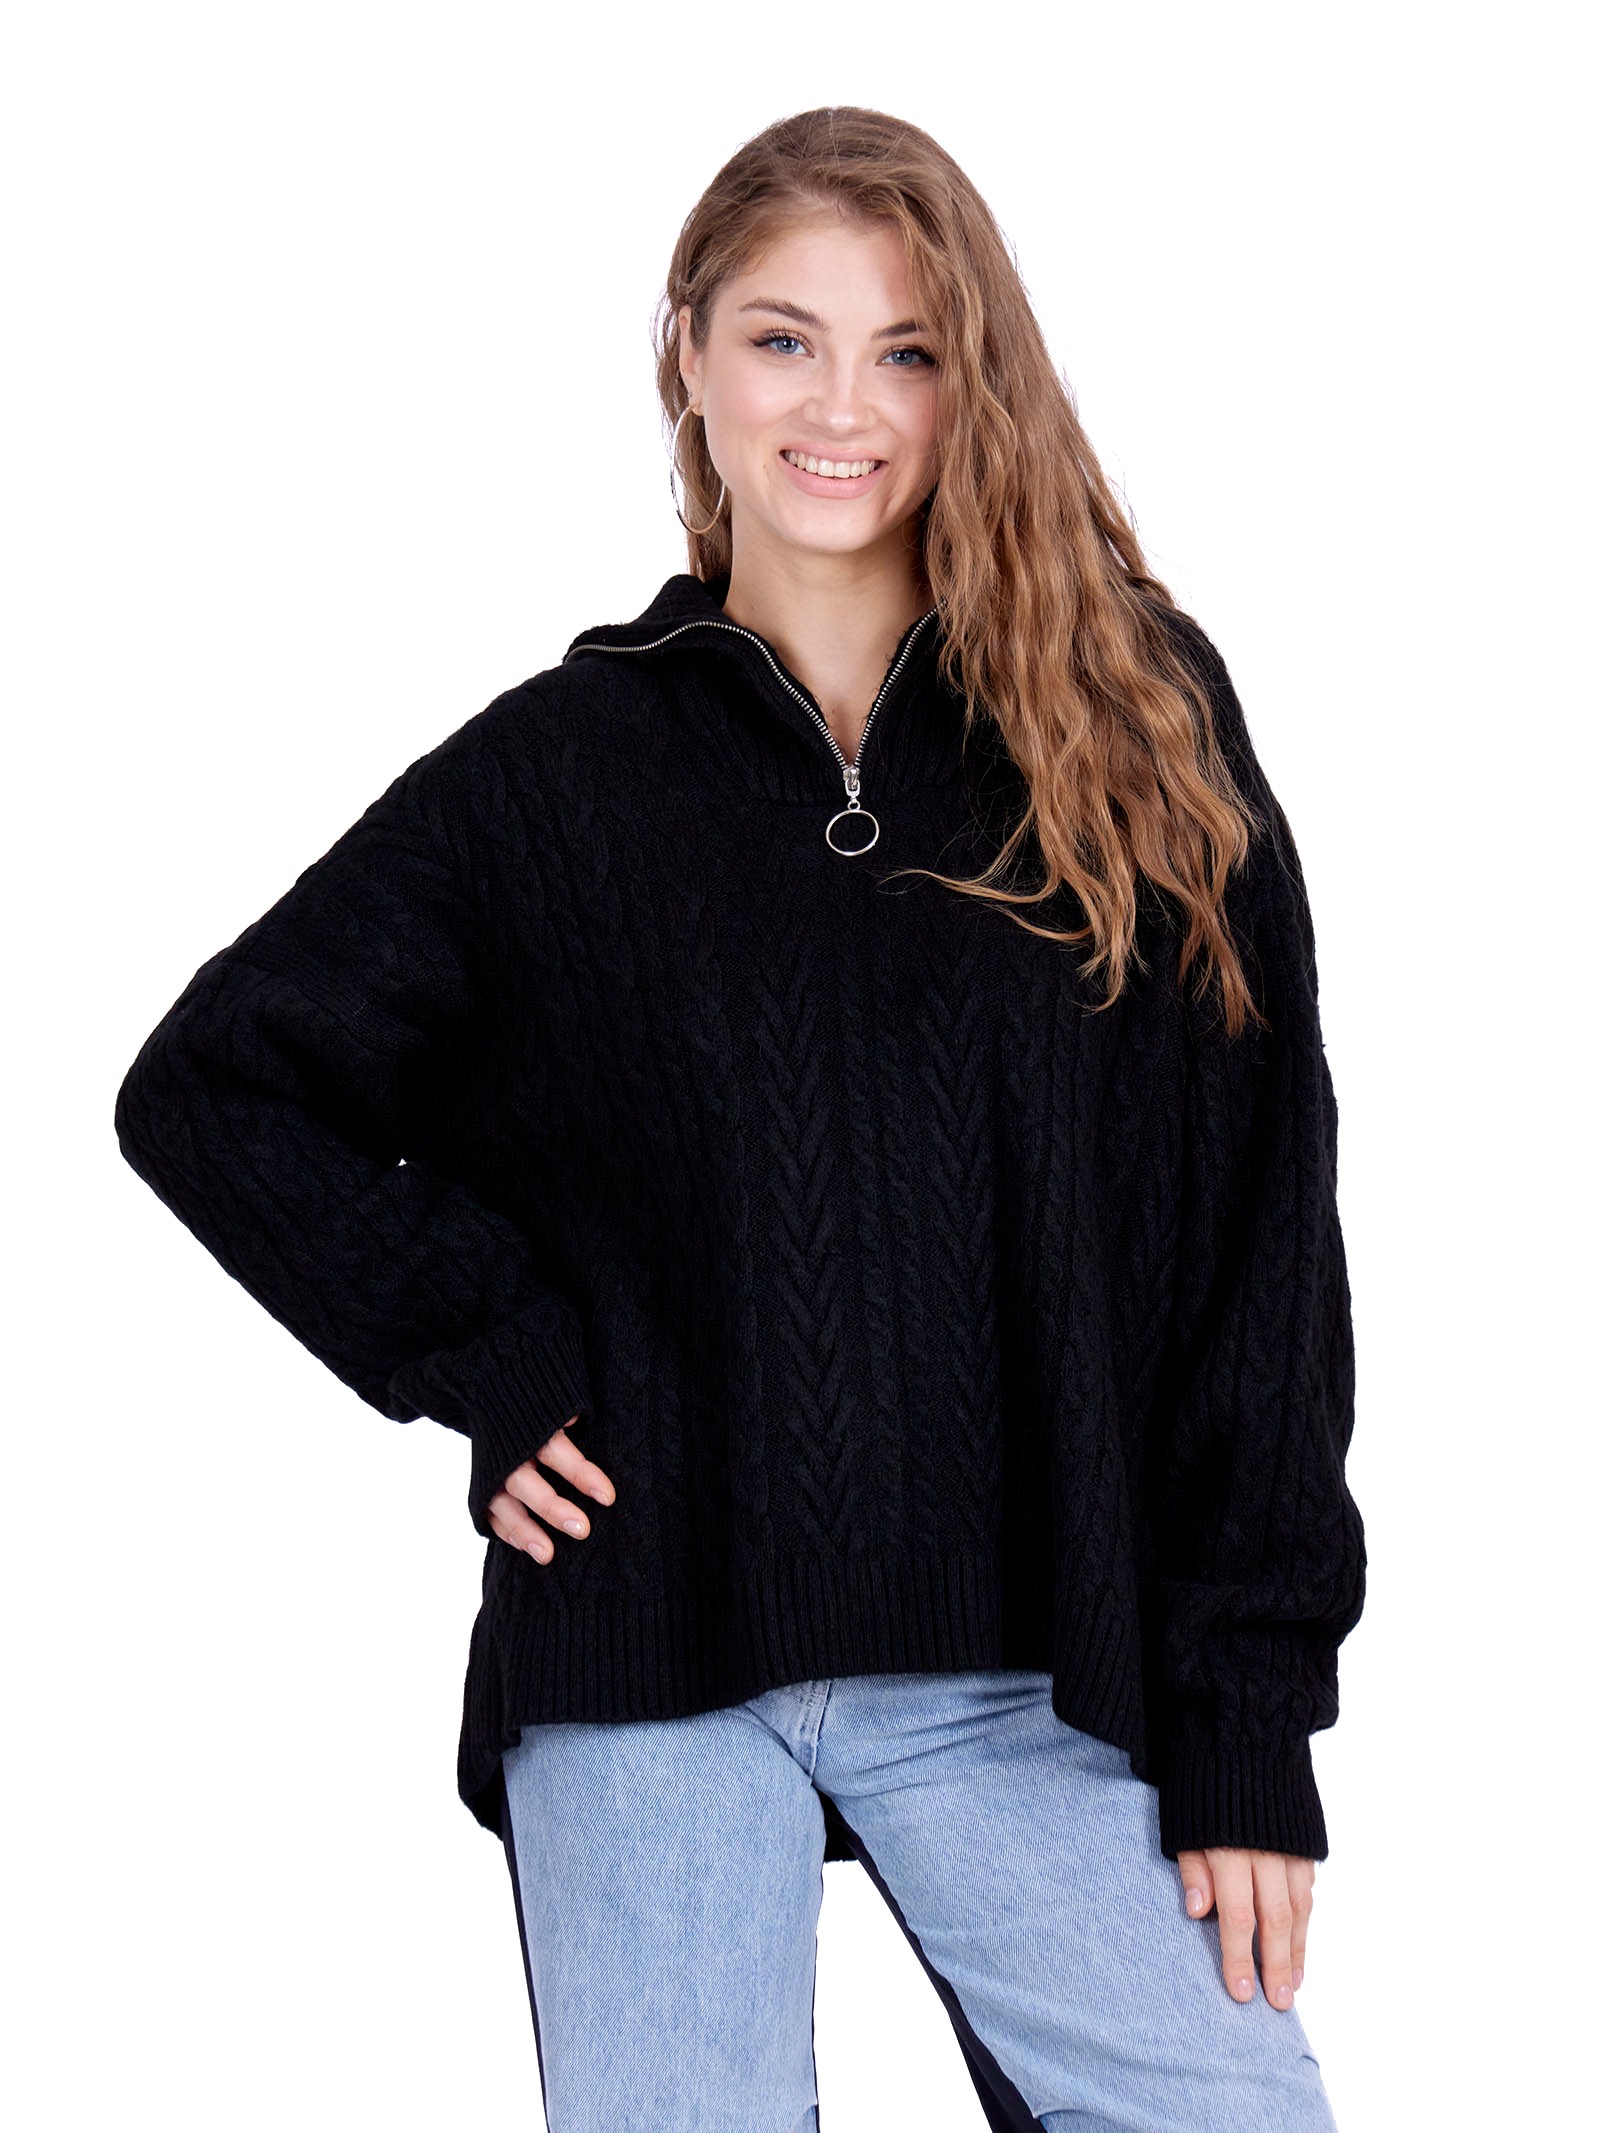 Open collar Knitwear Black Oversize Sweater with ziplock 